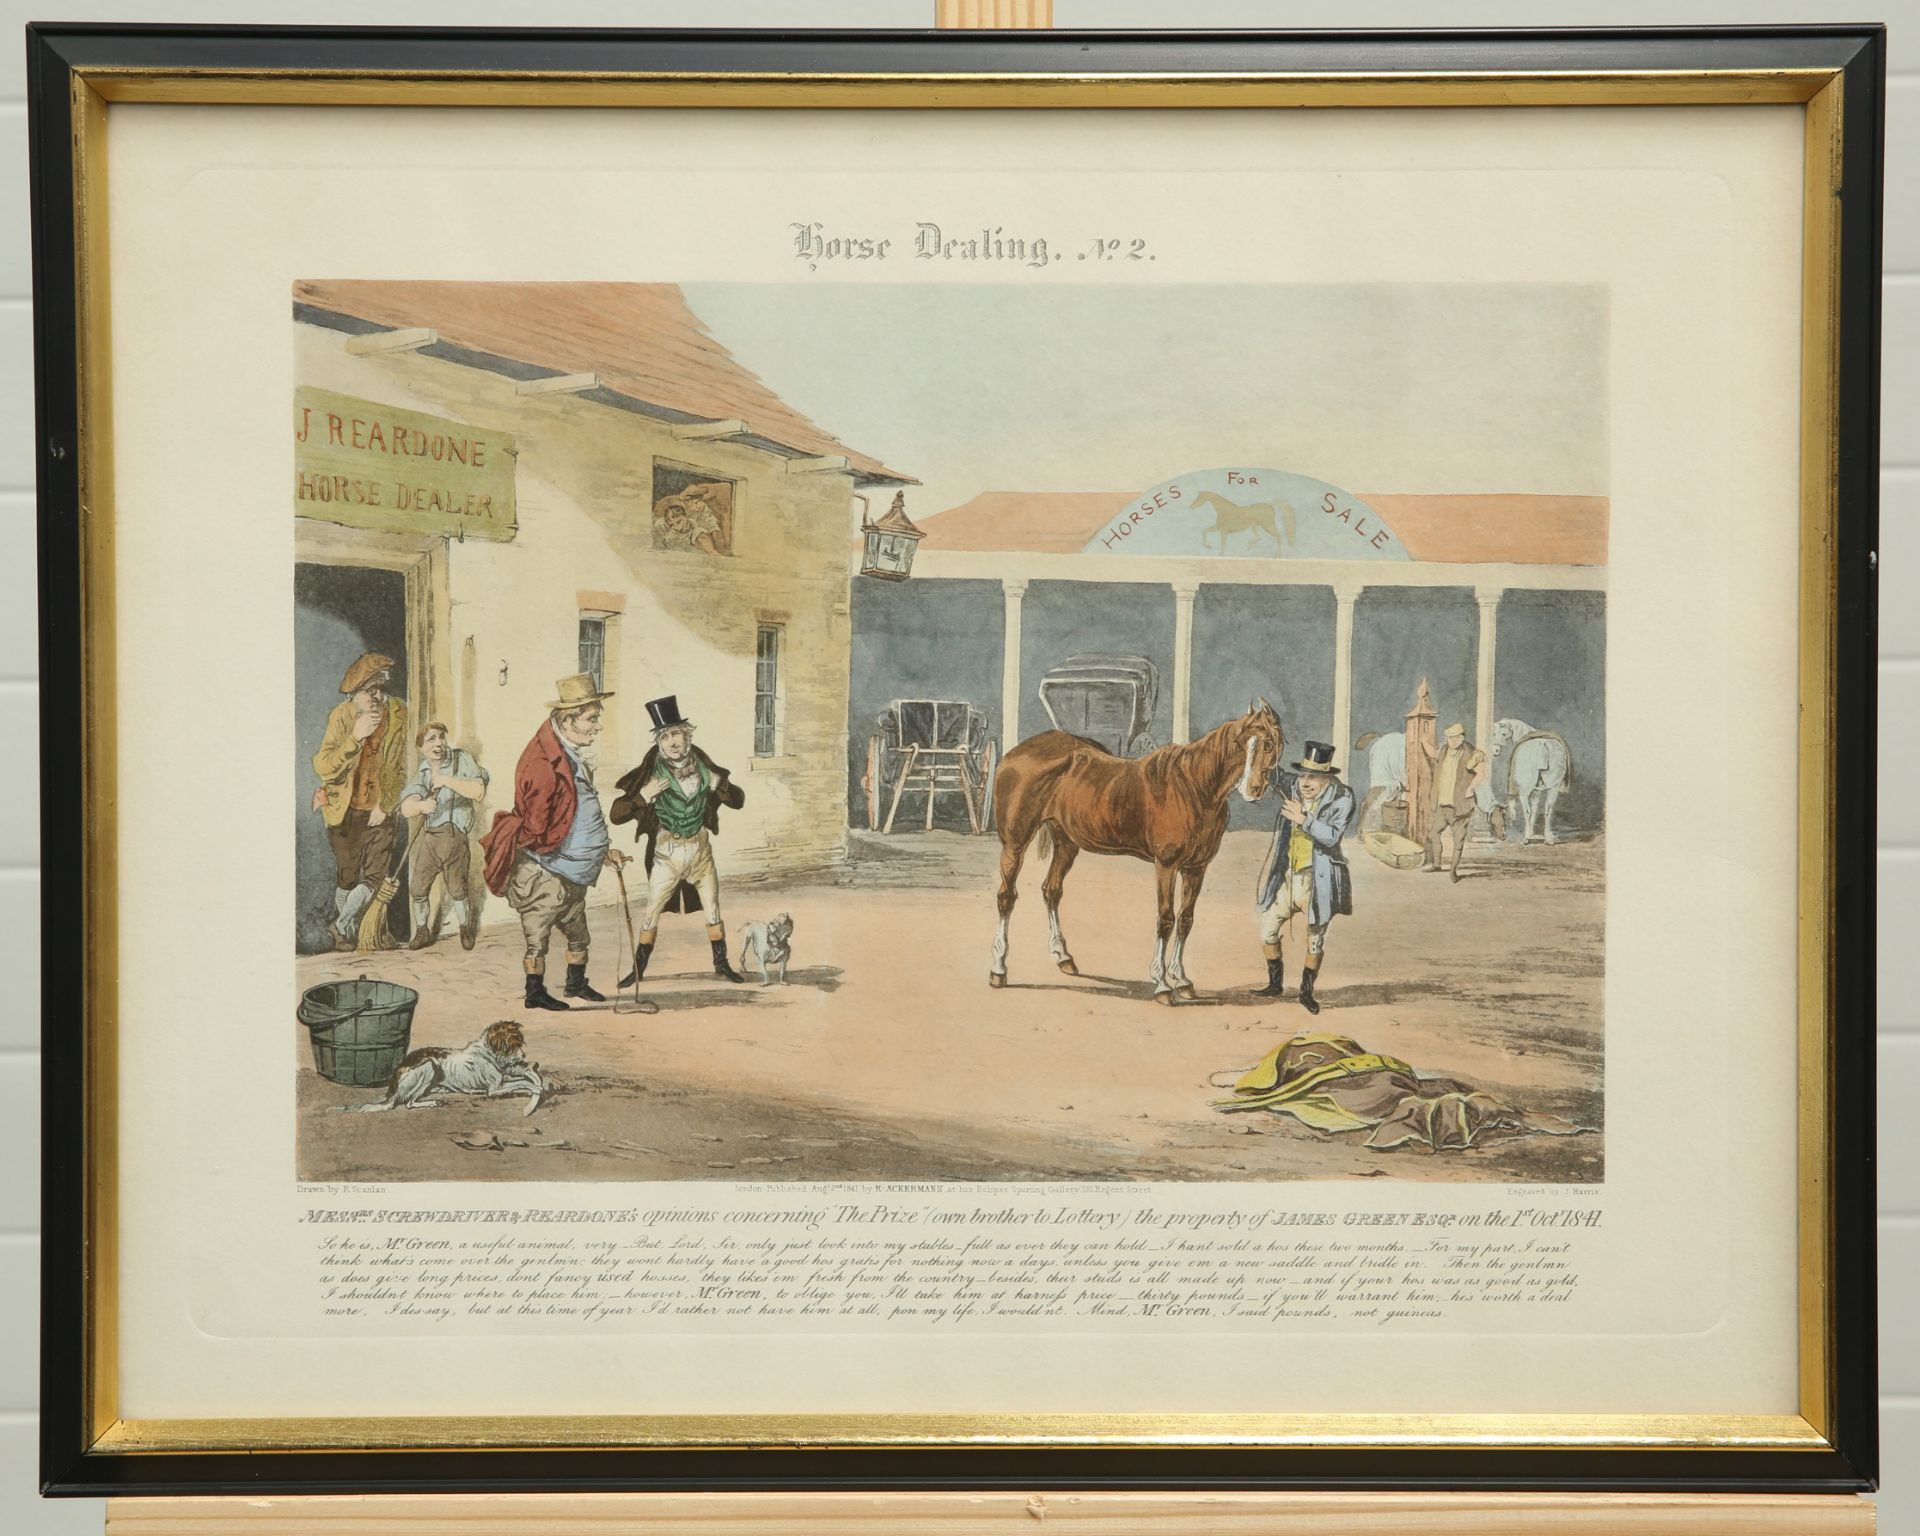 JOHN HARRIS III (1811-1865) AFTER R. SCANLAN, "HORSE DEALING"